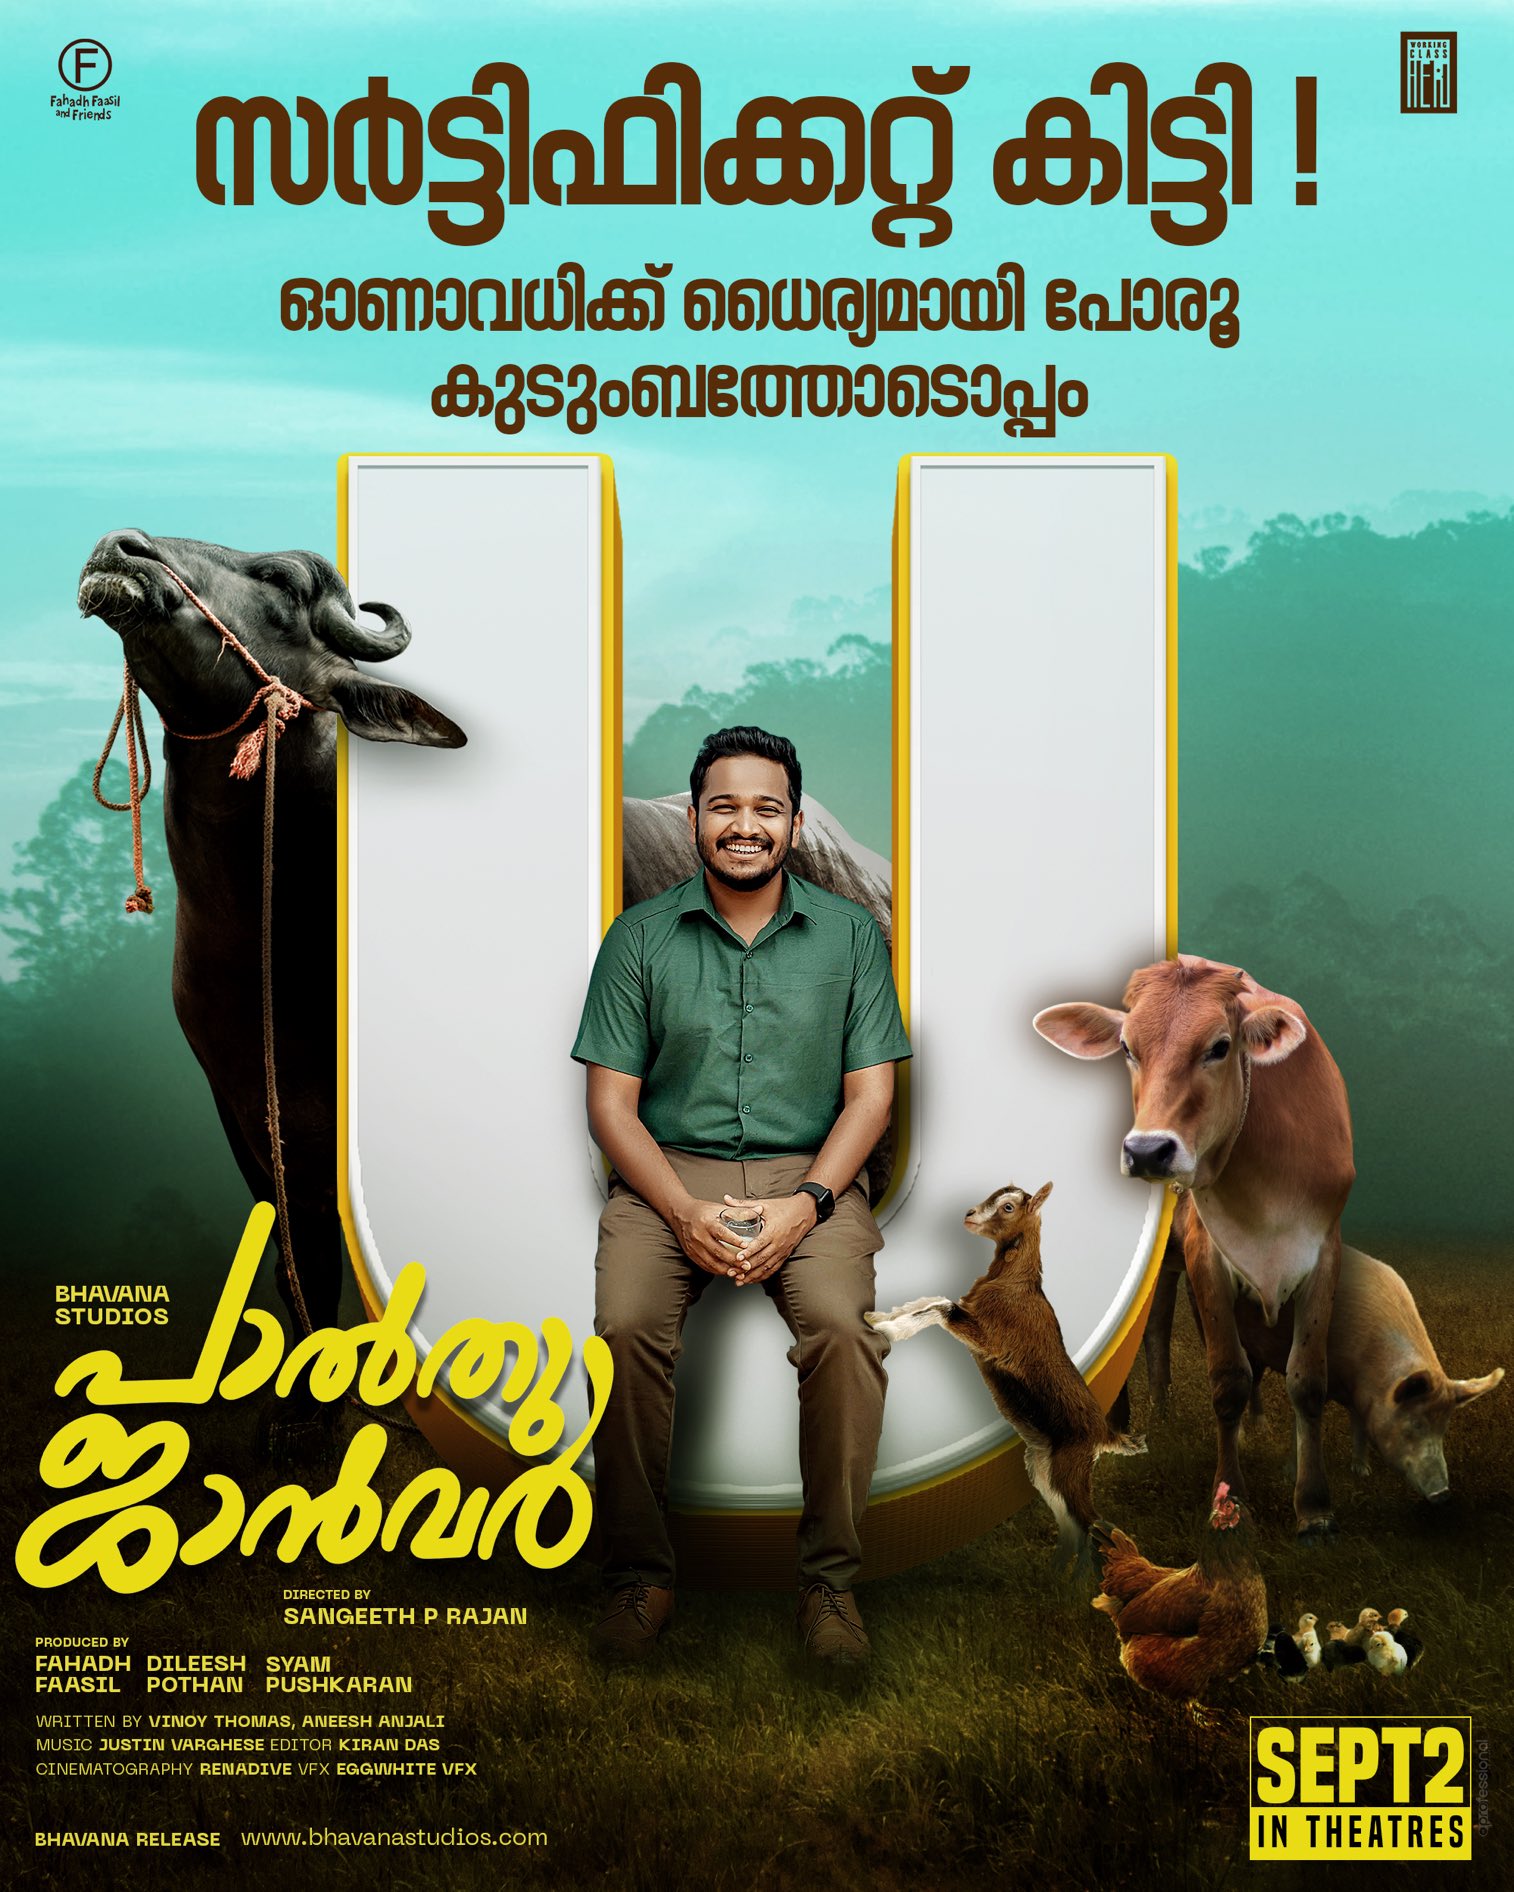 Palthu Janwar Malayalam film review - The South First